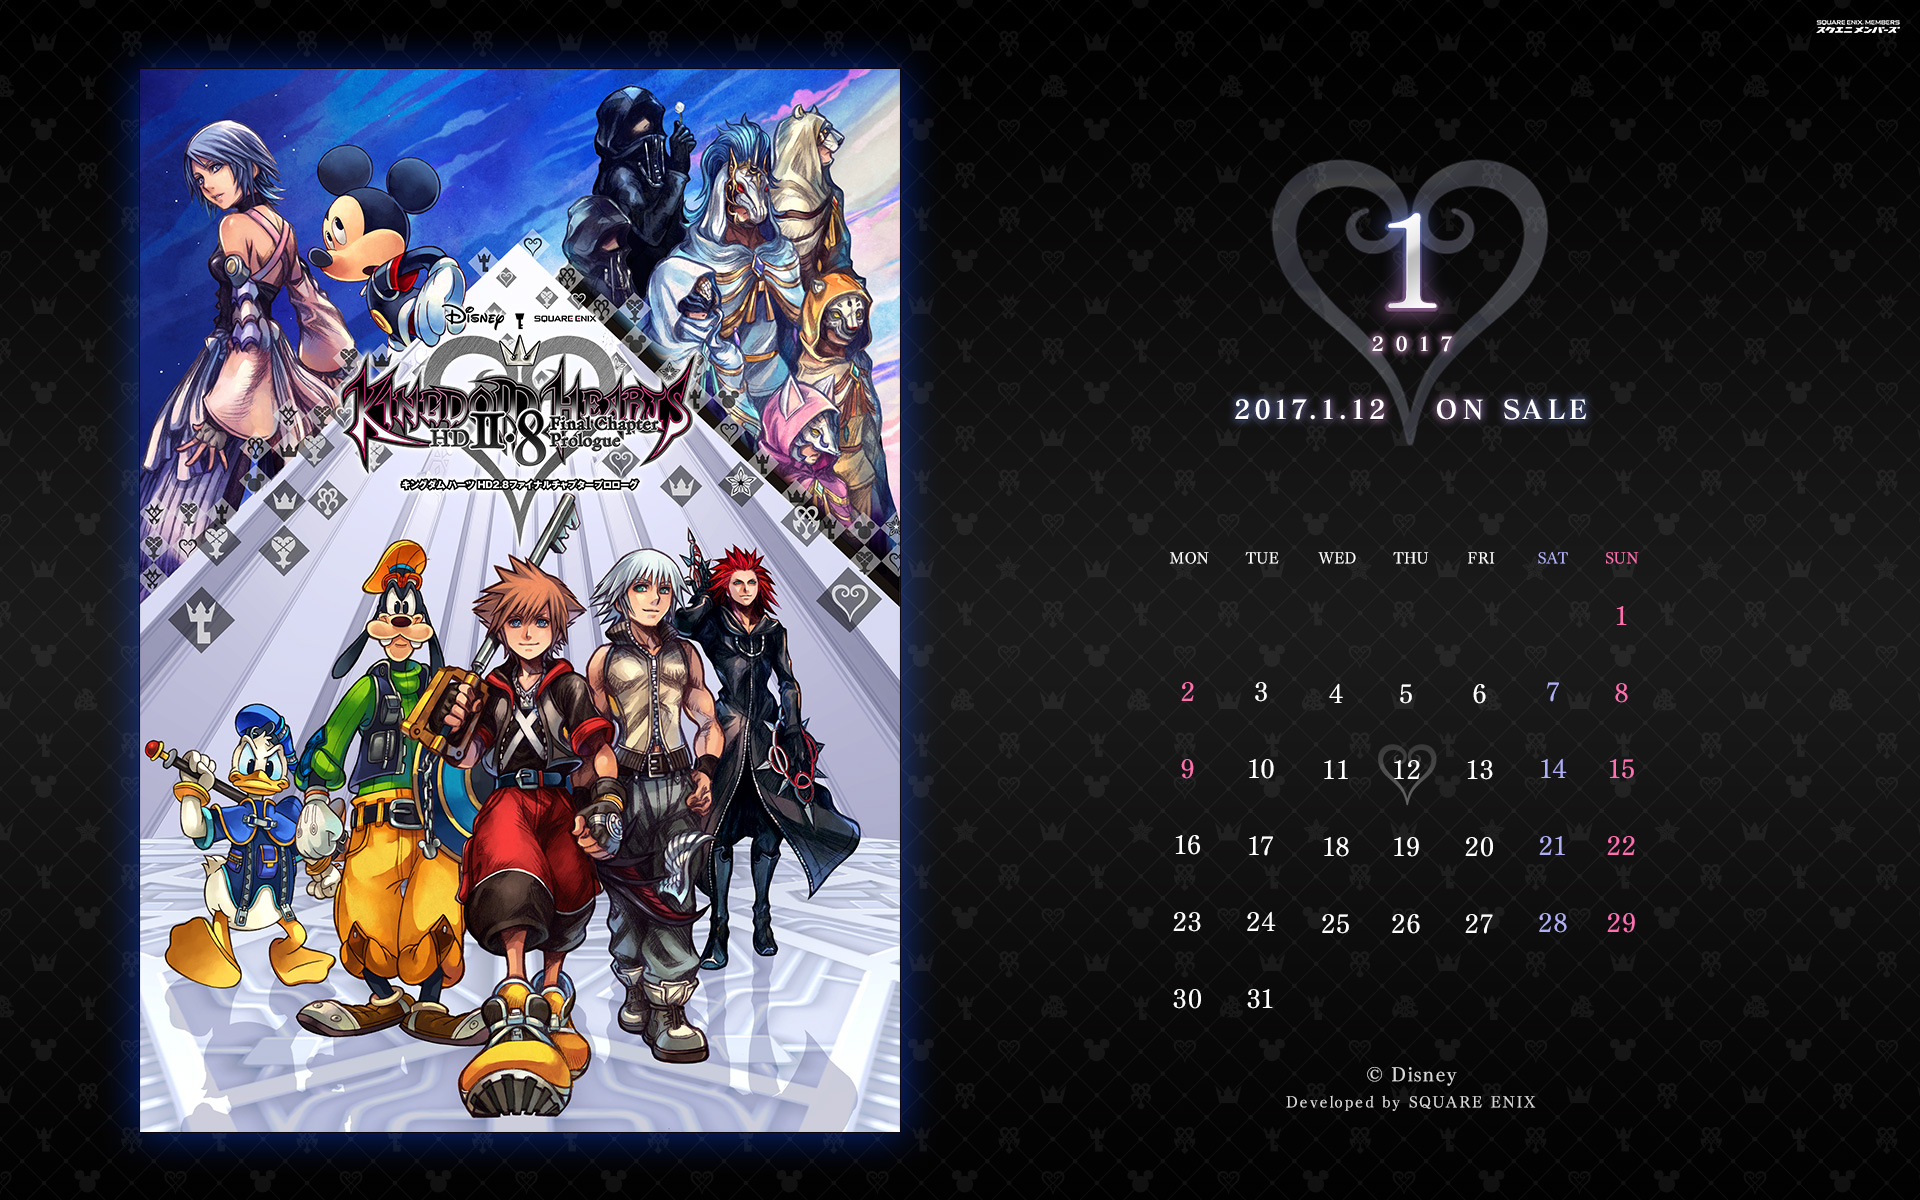 Kingdom Hearts Hd 2 8 Digital Wallpaper Released News Kingdom Hearts Insider